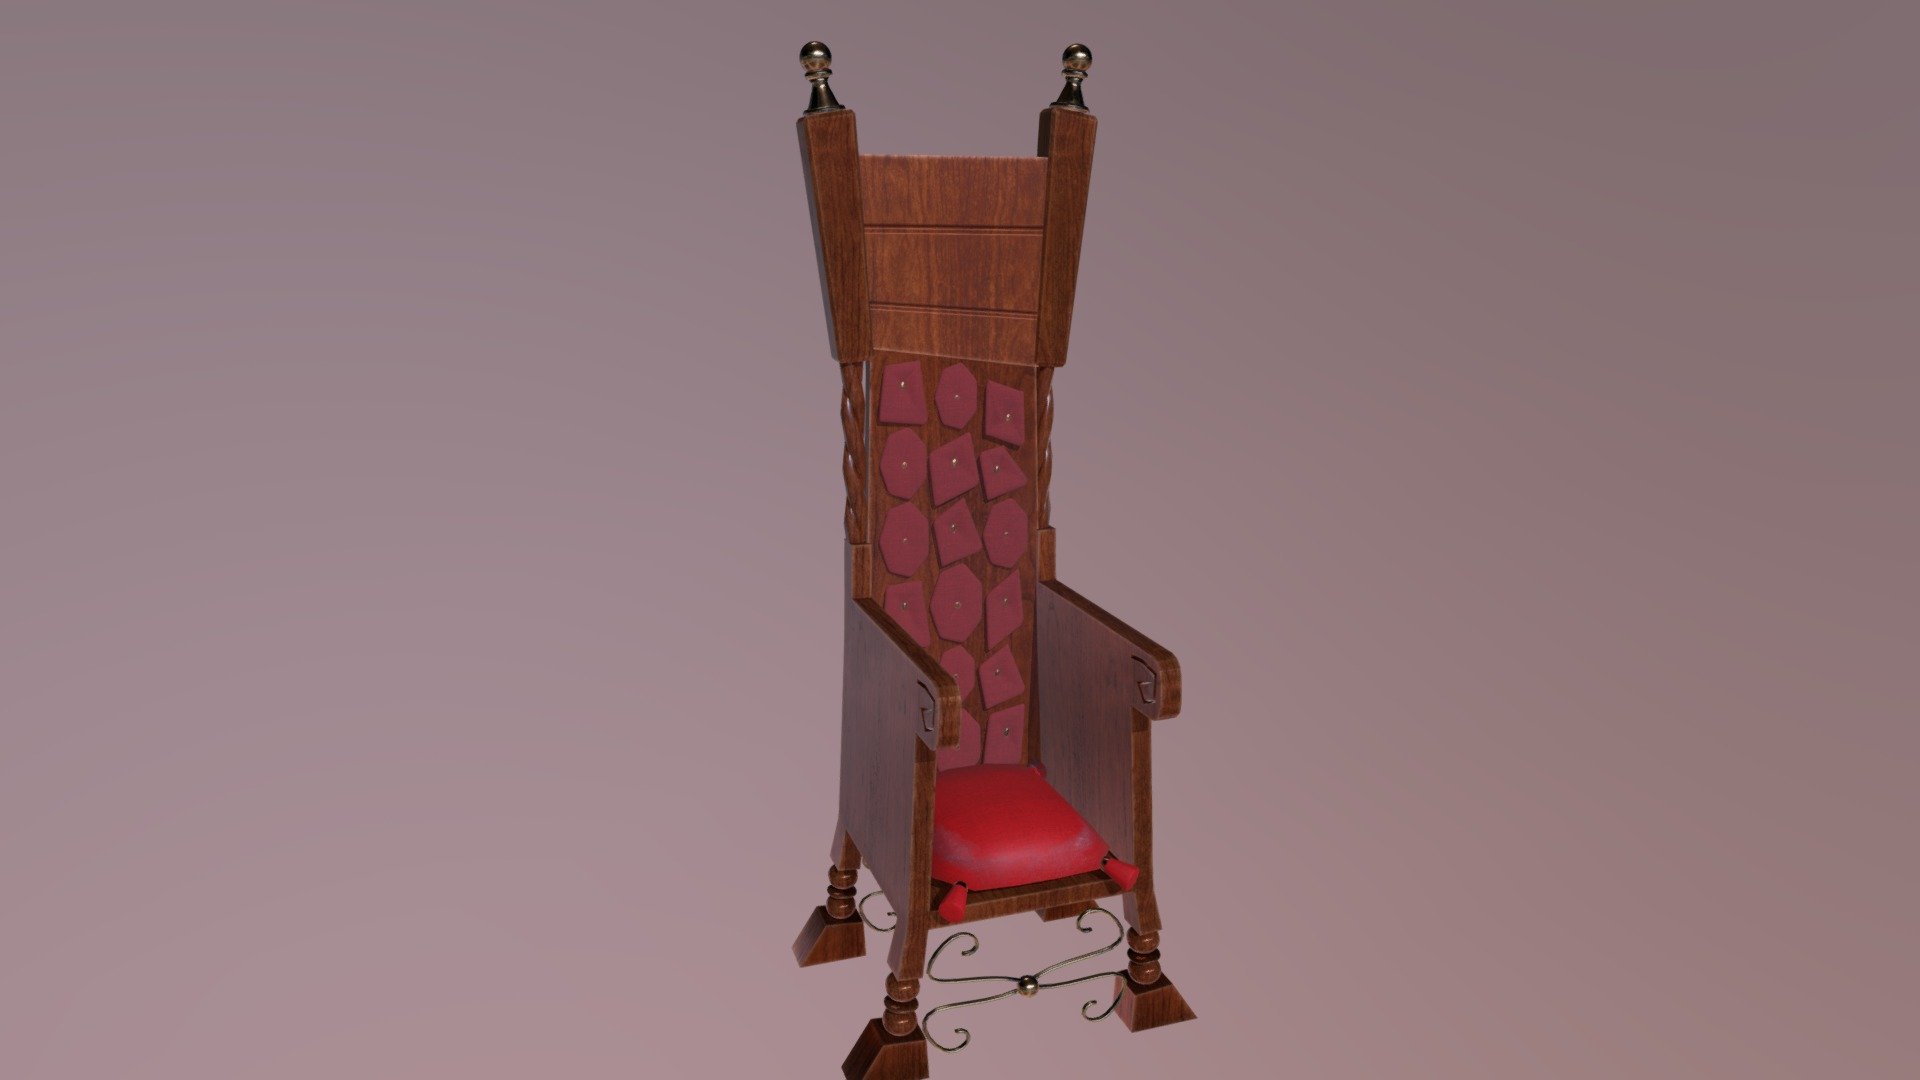 throne